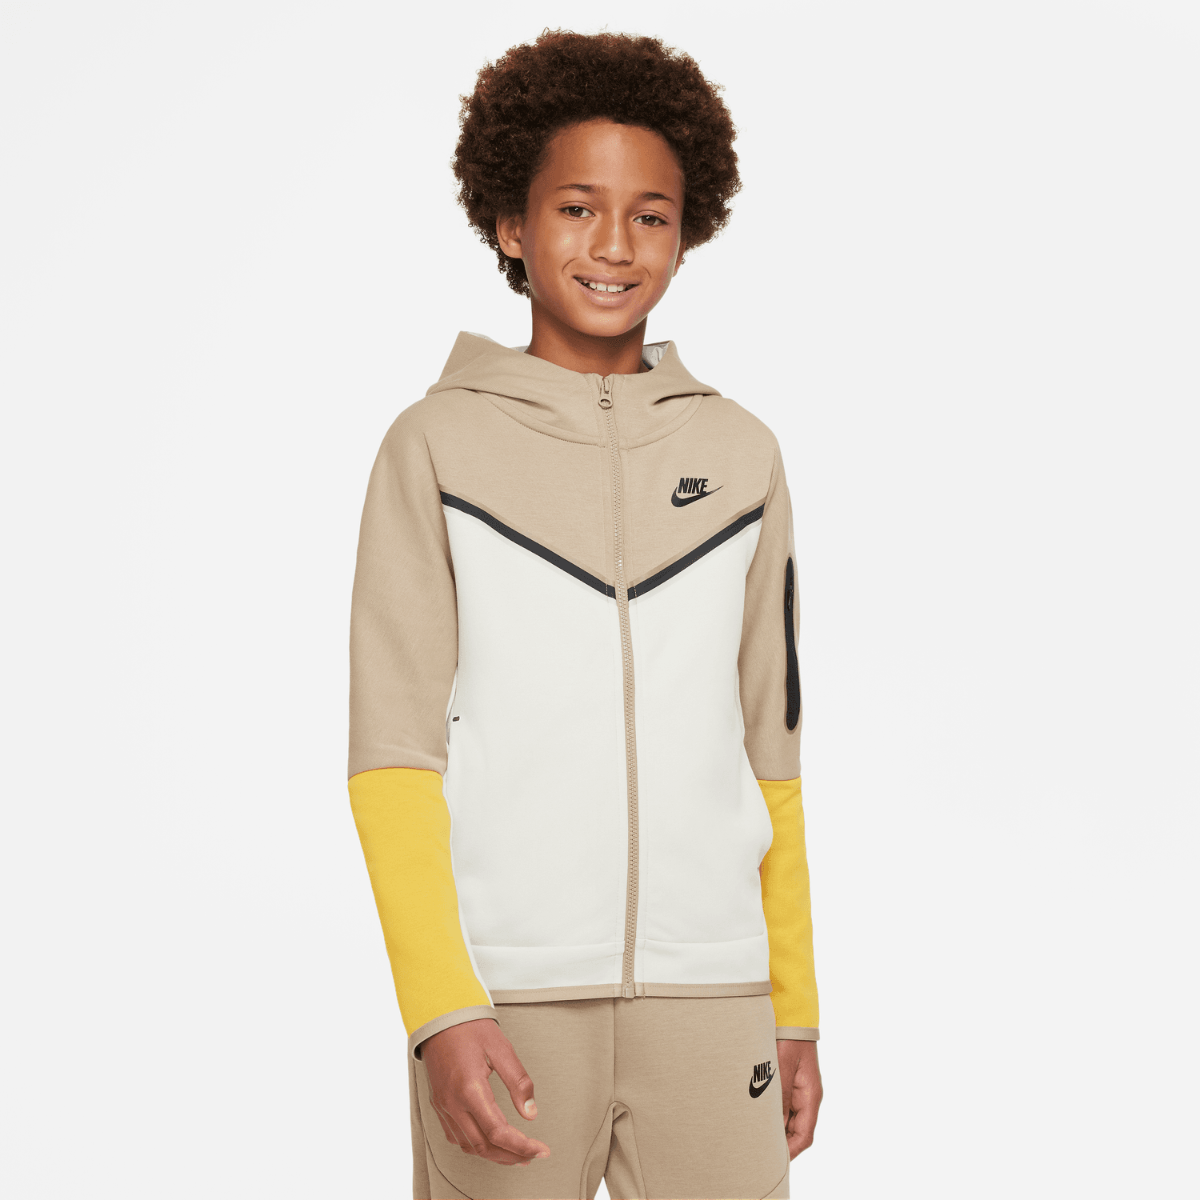 Veste Nike Tech Fleece Junior - Beige/Blanc/Jaune